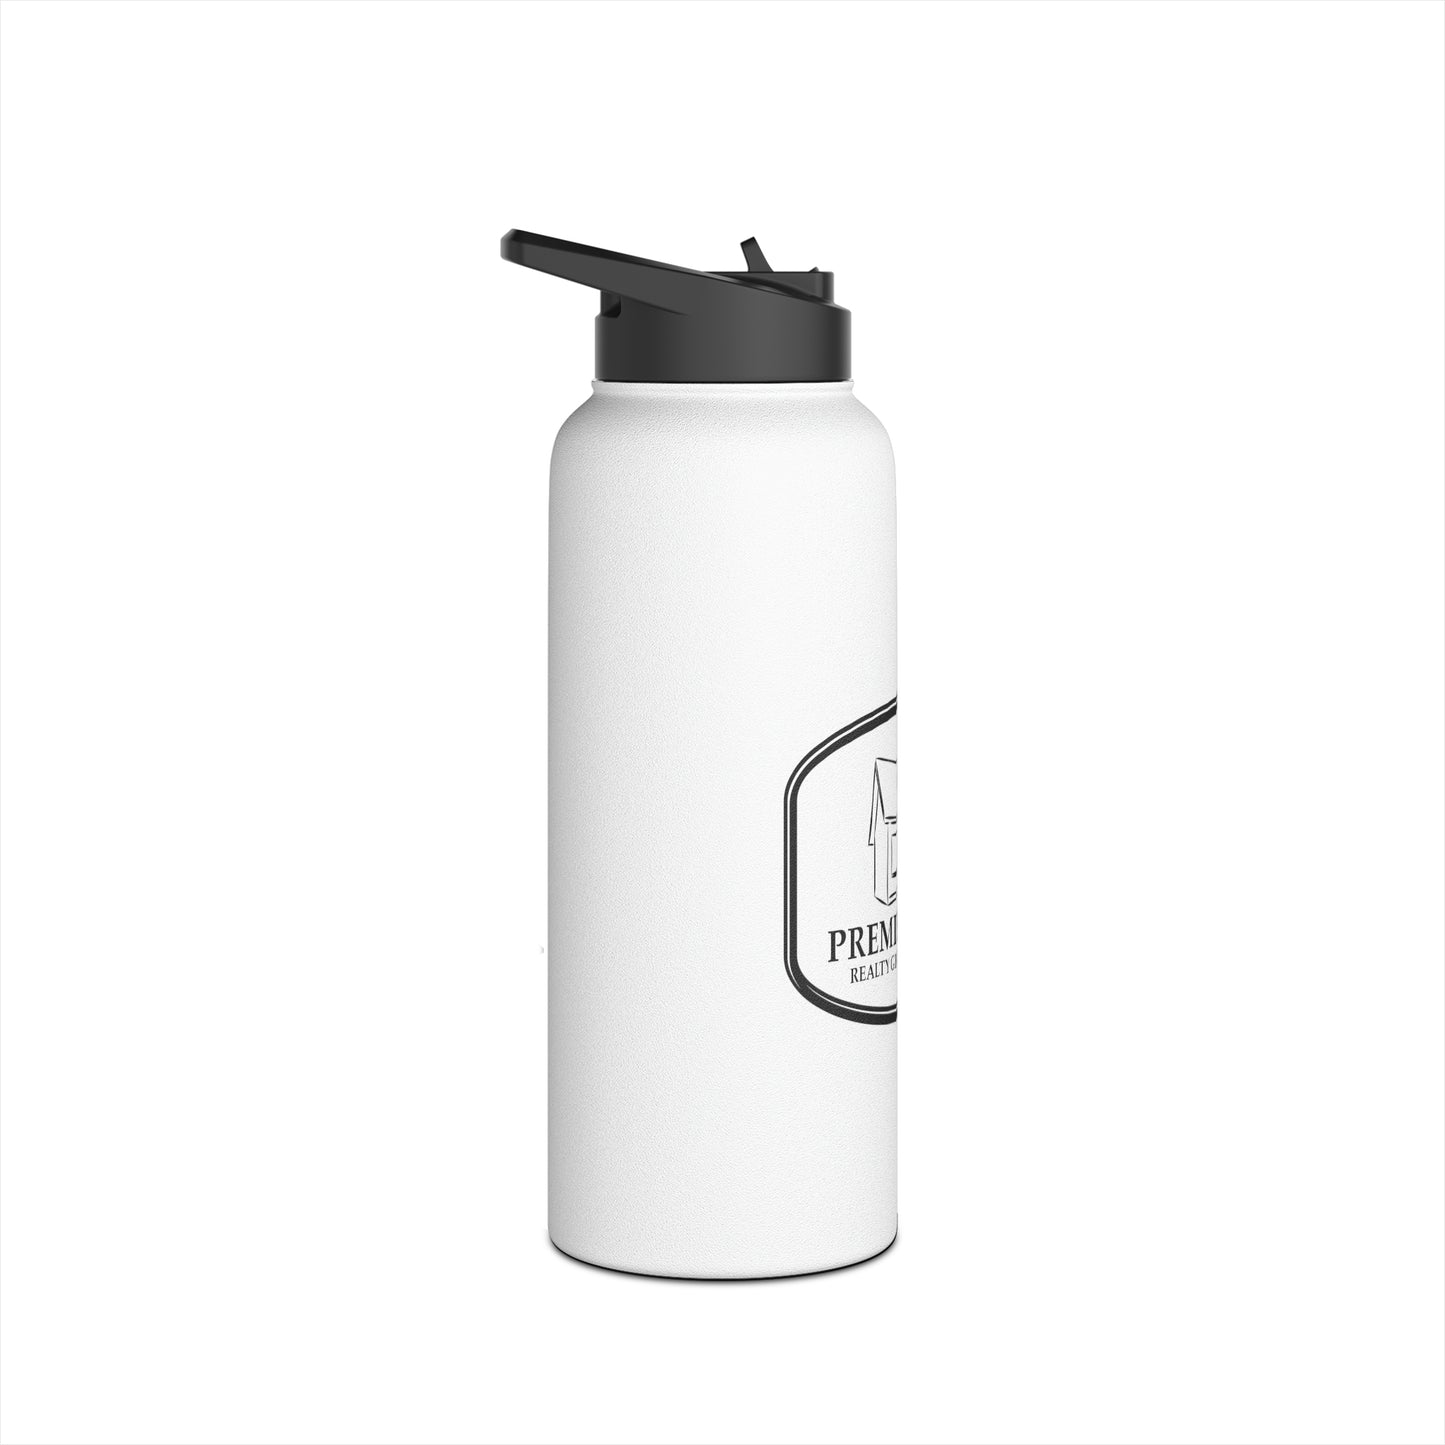 Stainless Steel Water Bottle, Standard Lid - Home